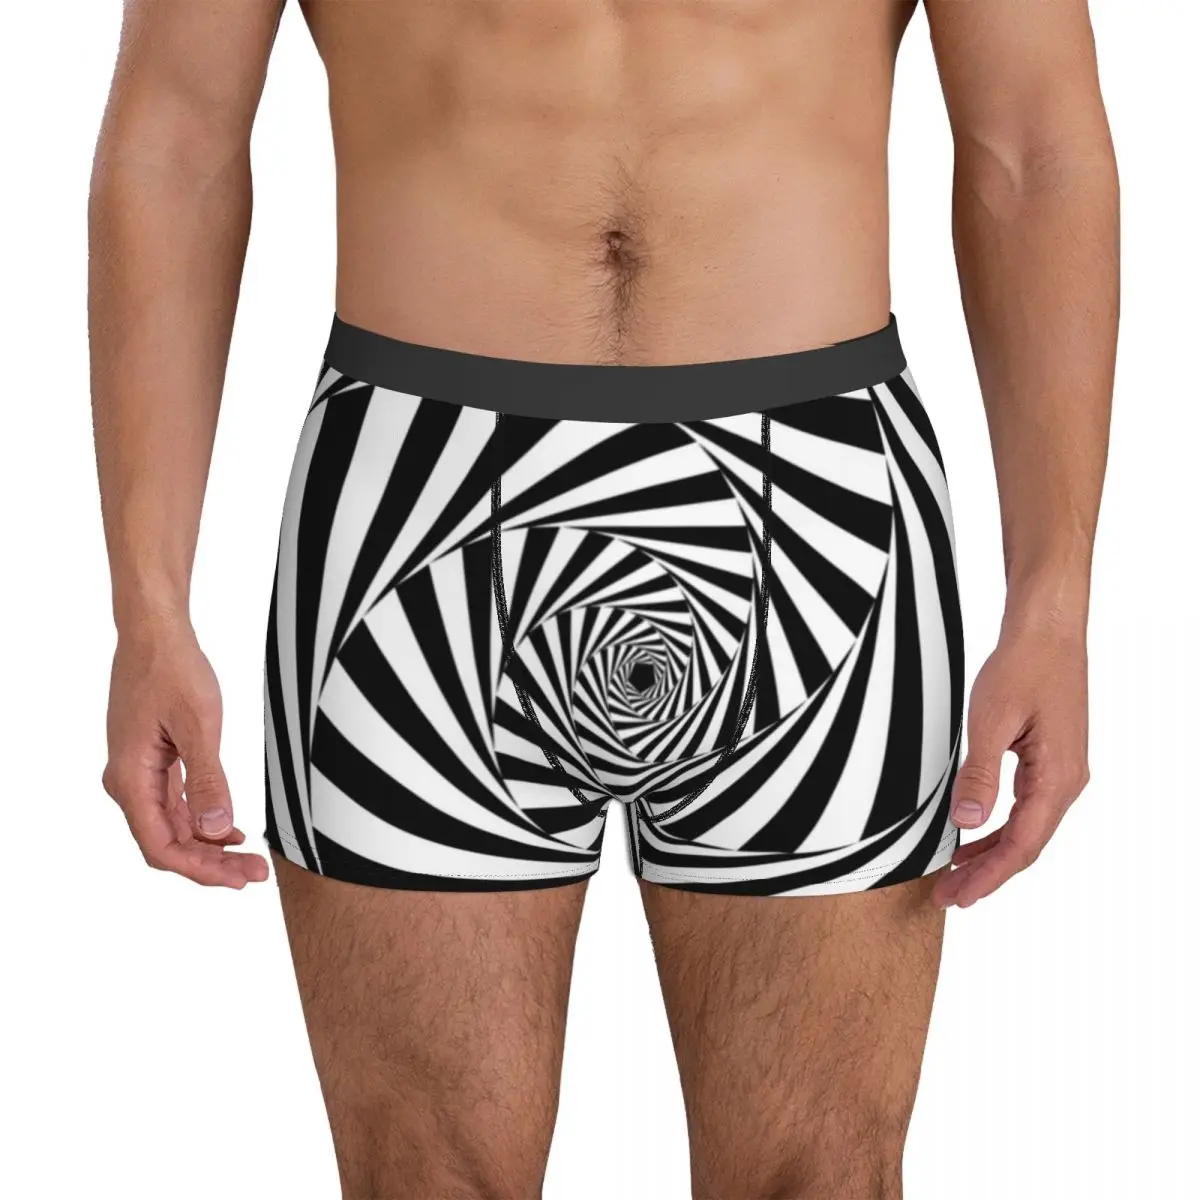 

Black And White Zebra Print Underwear Aperture Spiral Men Underpants Design Classic Boxer Shorts Hot Boxer Brief Big Size 2XL